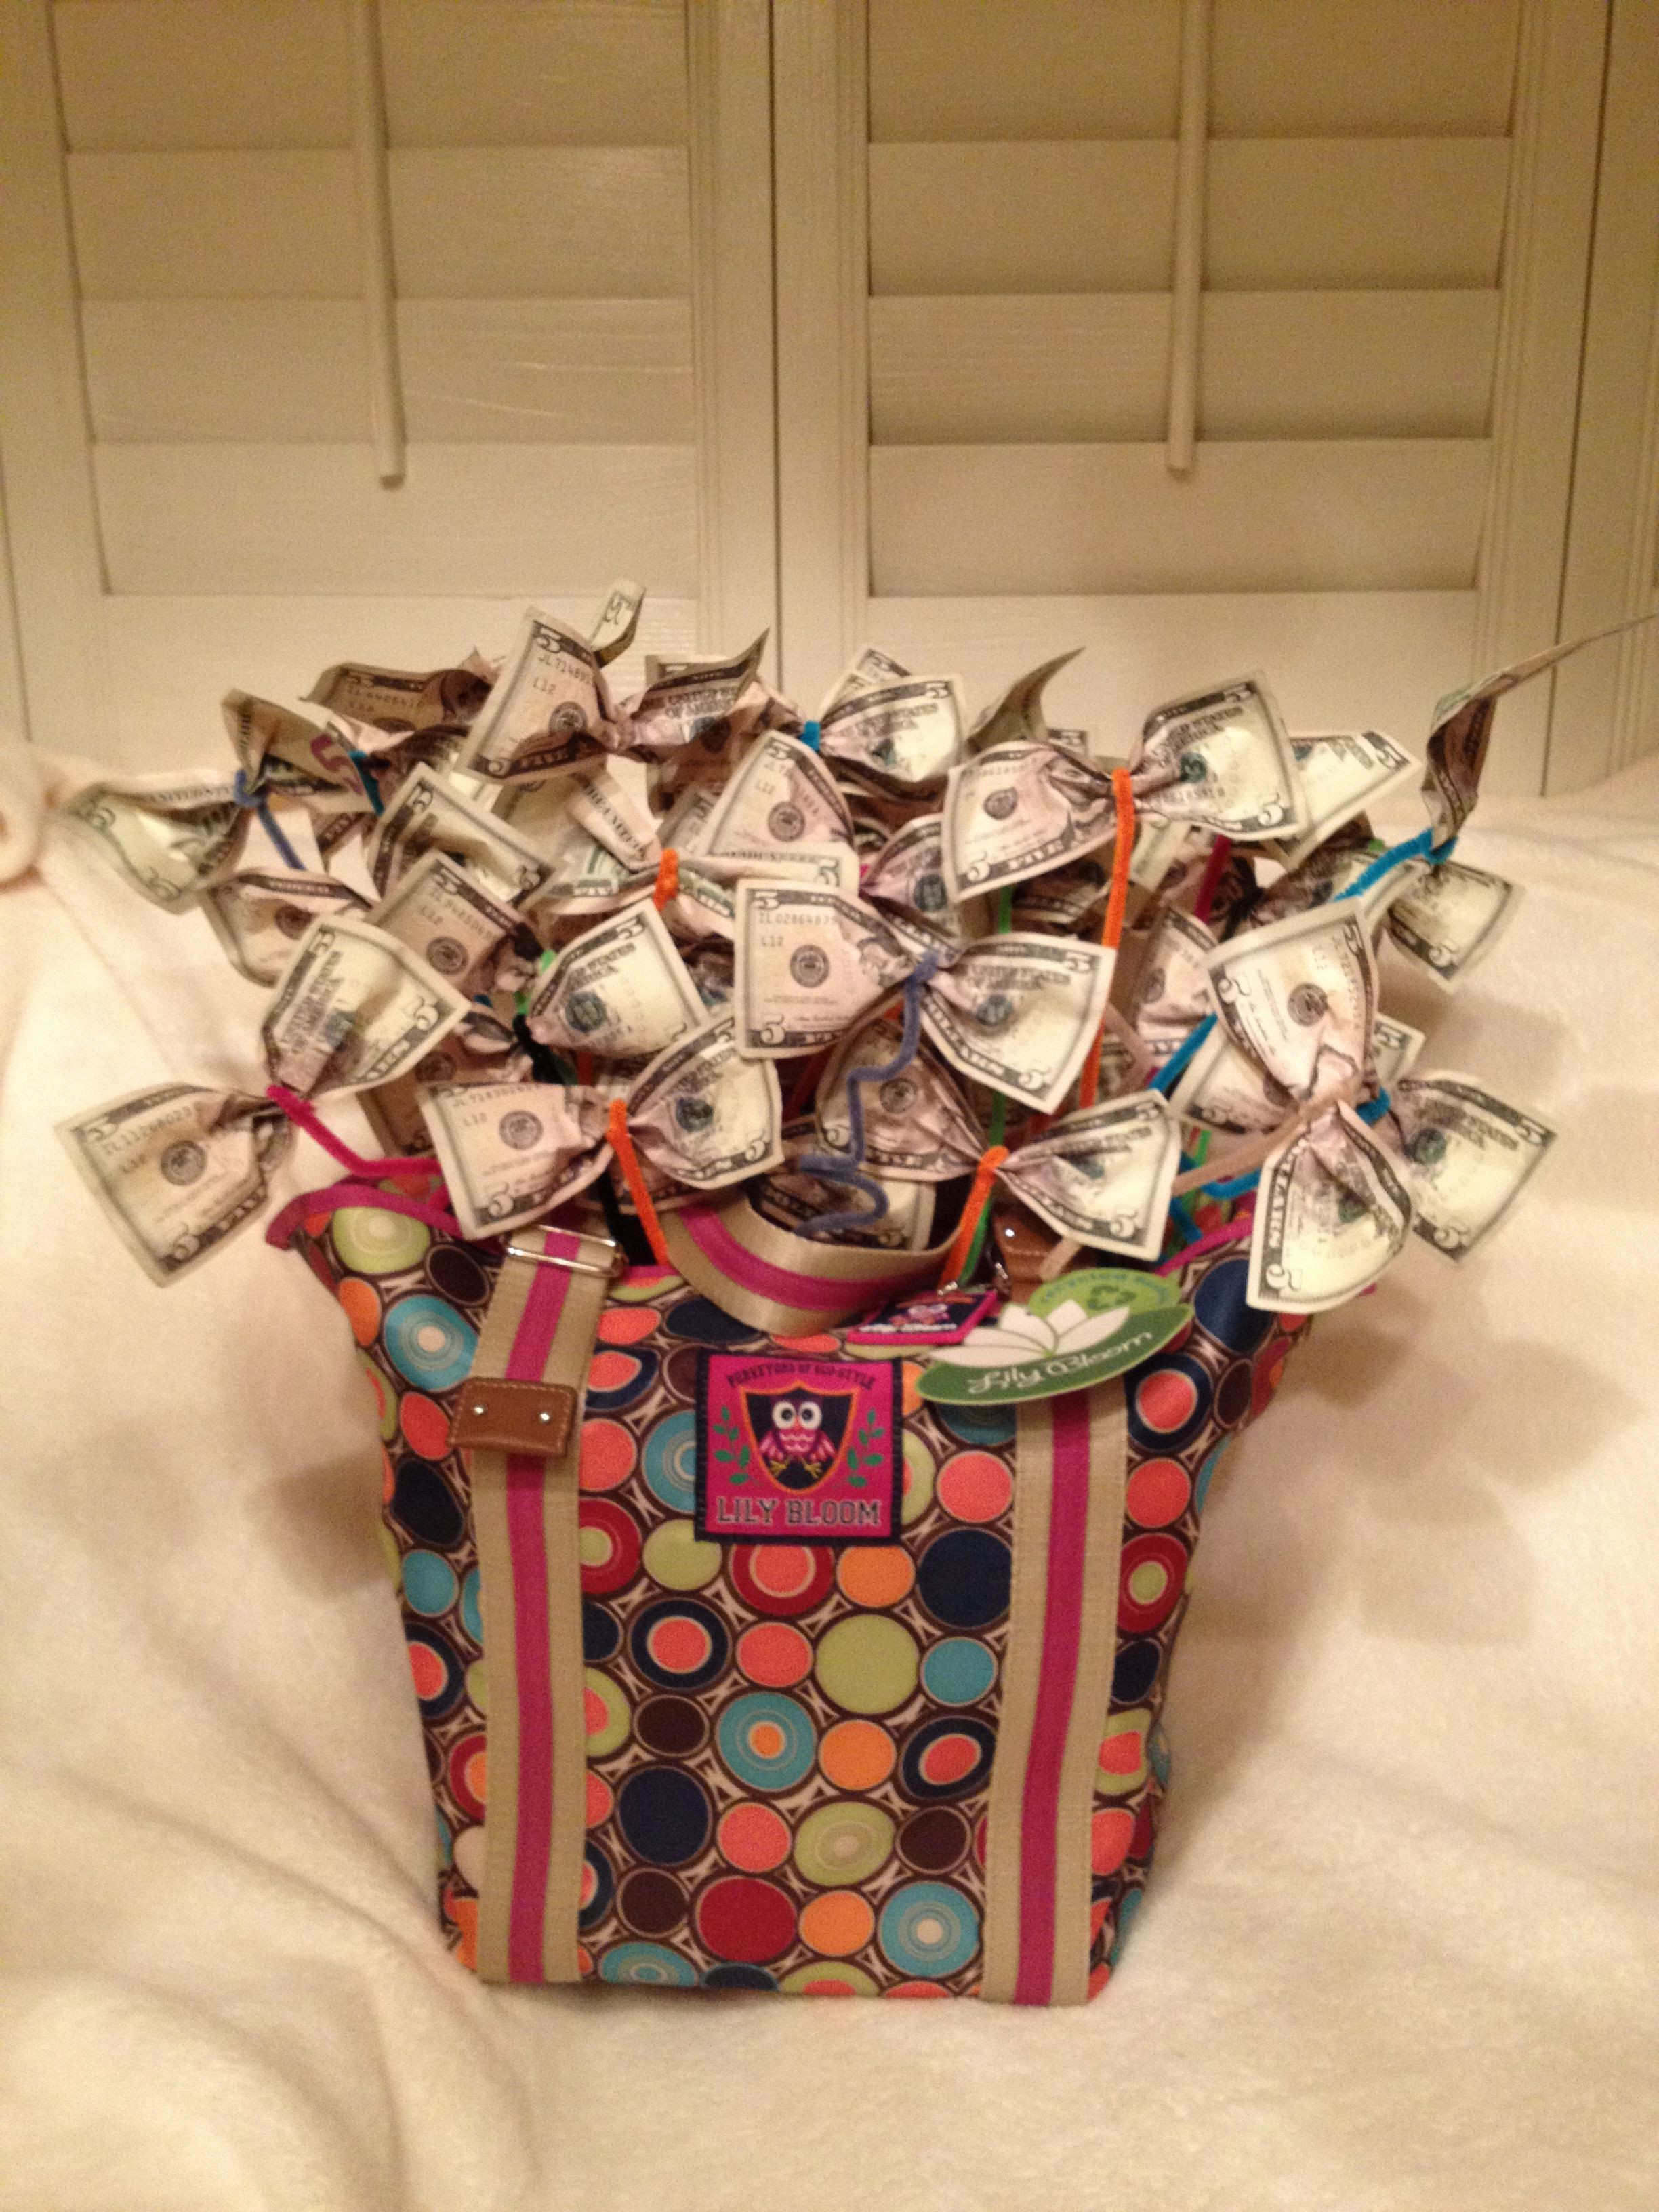 Unique Ideas Raffle Gift Basket
 "money bag" Raffle basket I made for Chorus fund raiser